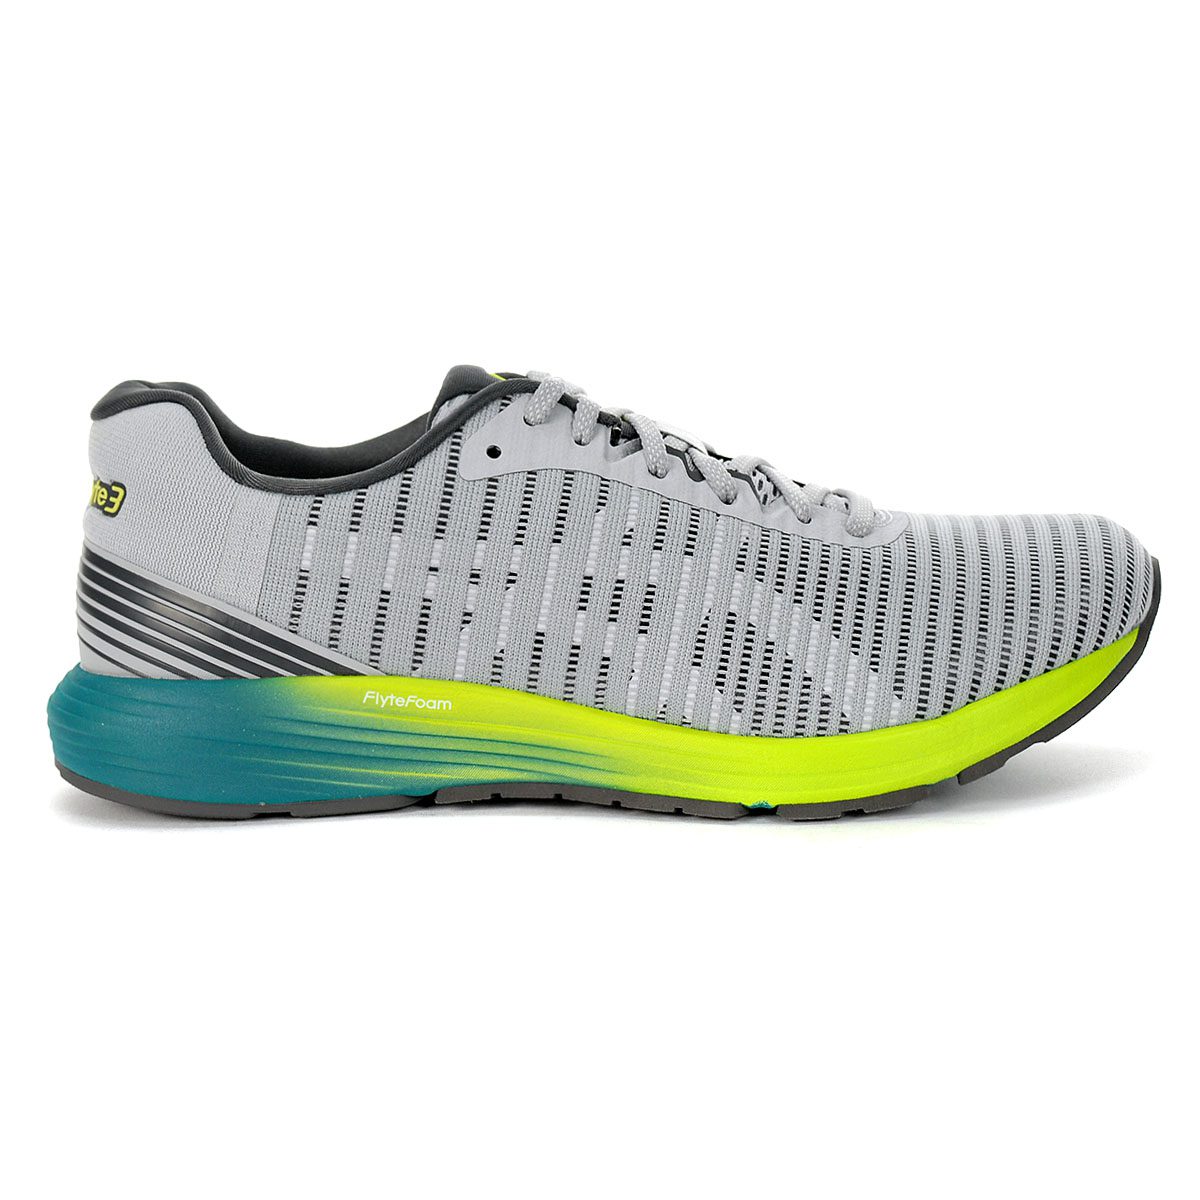 ASICS Men's DYNAFLYTE 3 Mid Grey/White Running Shoes 1011A002.021 NEW | eBay